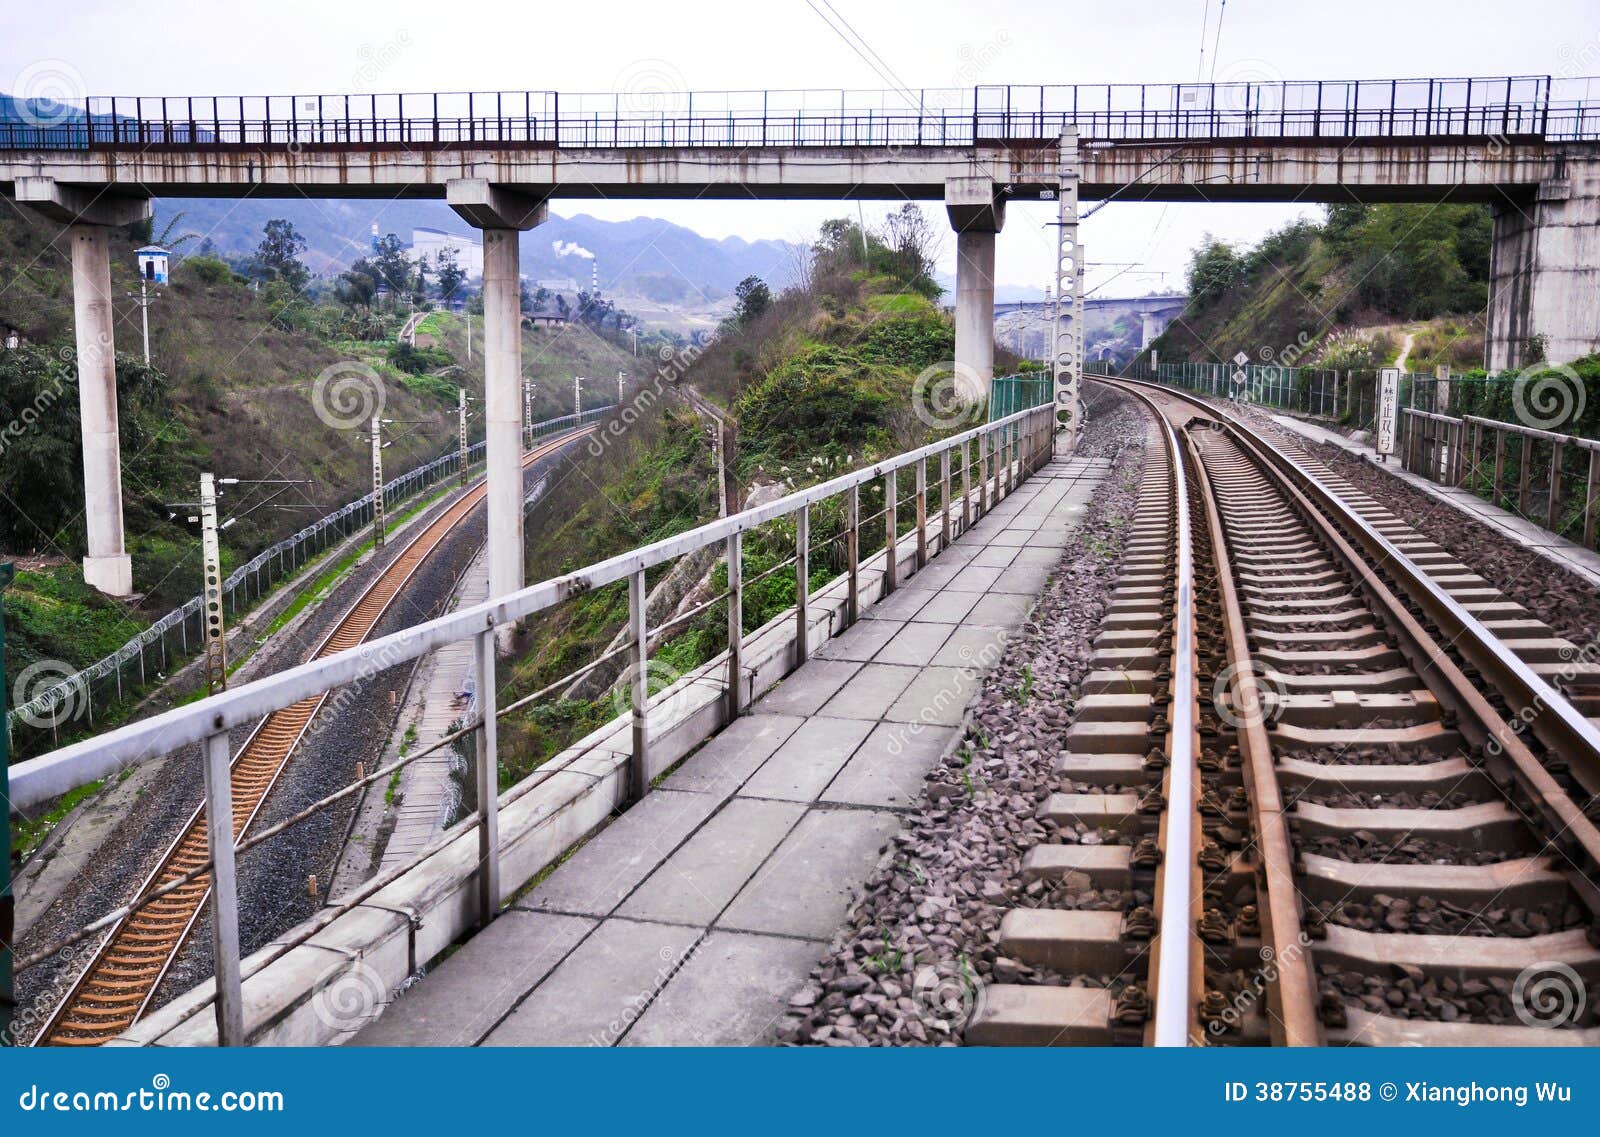 the crisscross railway tracks